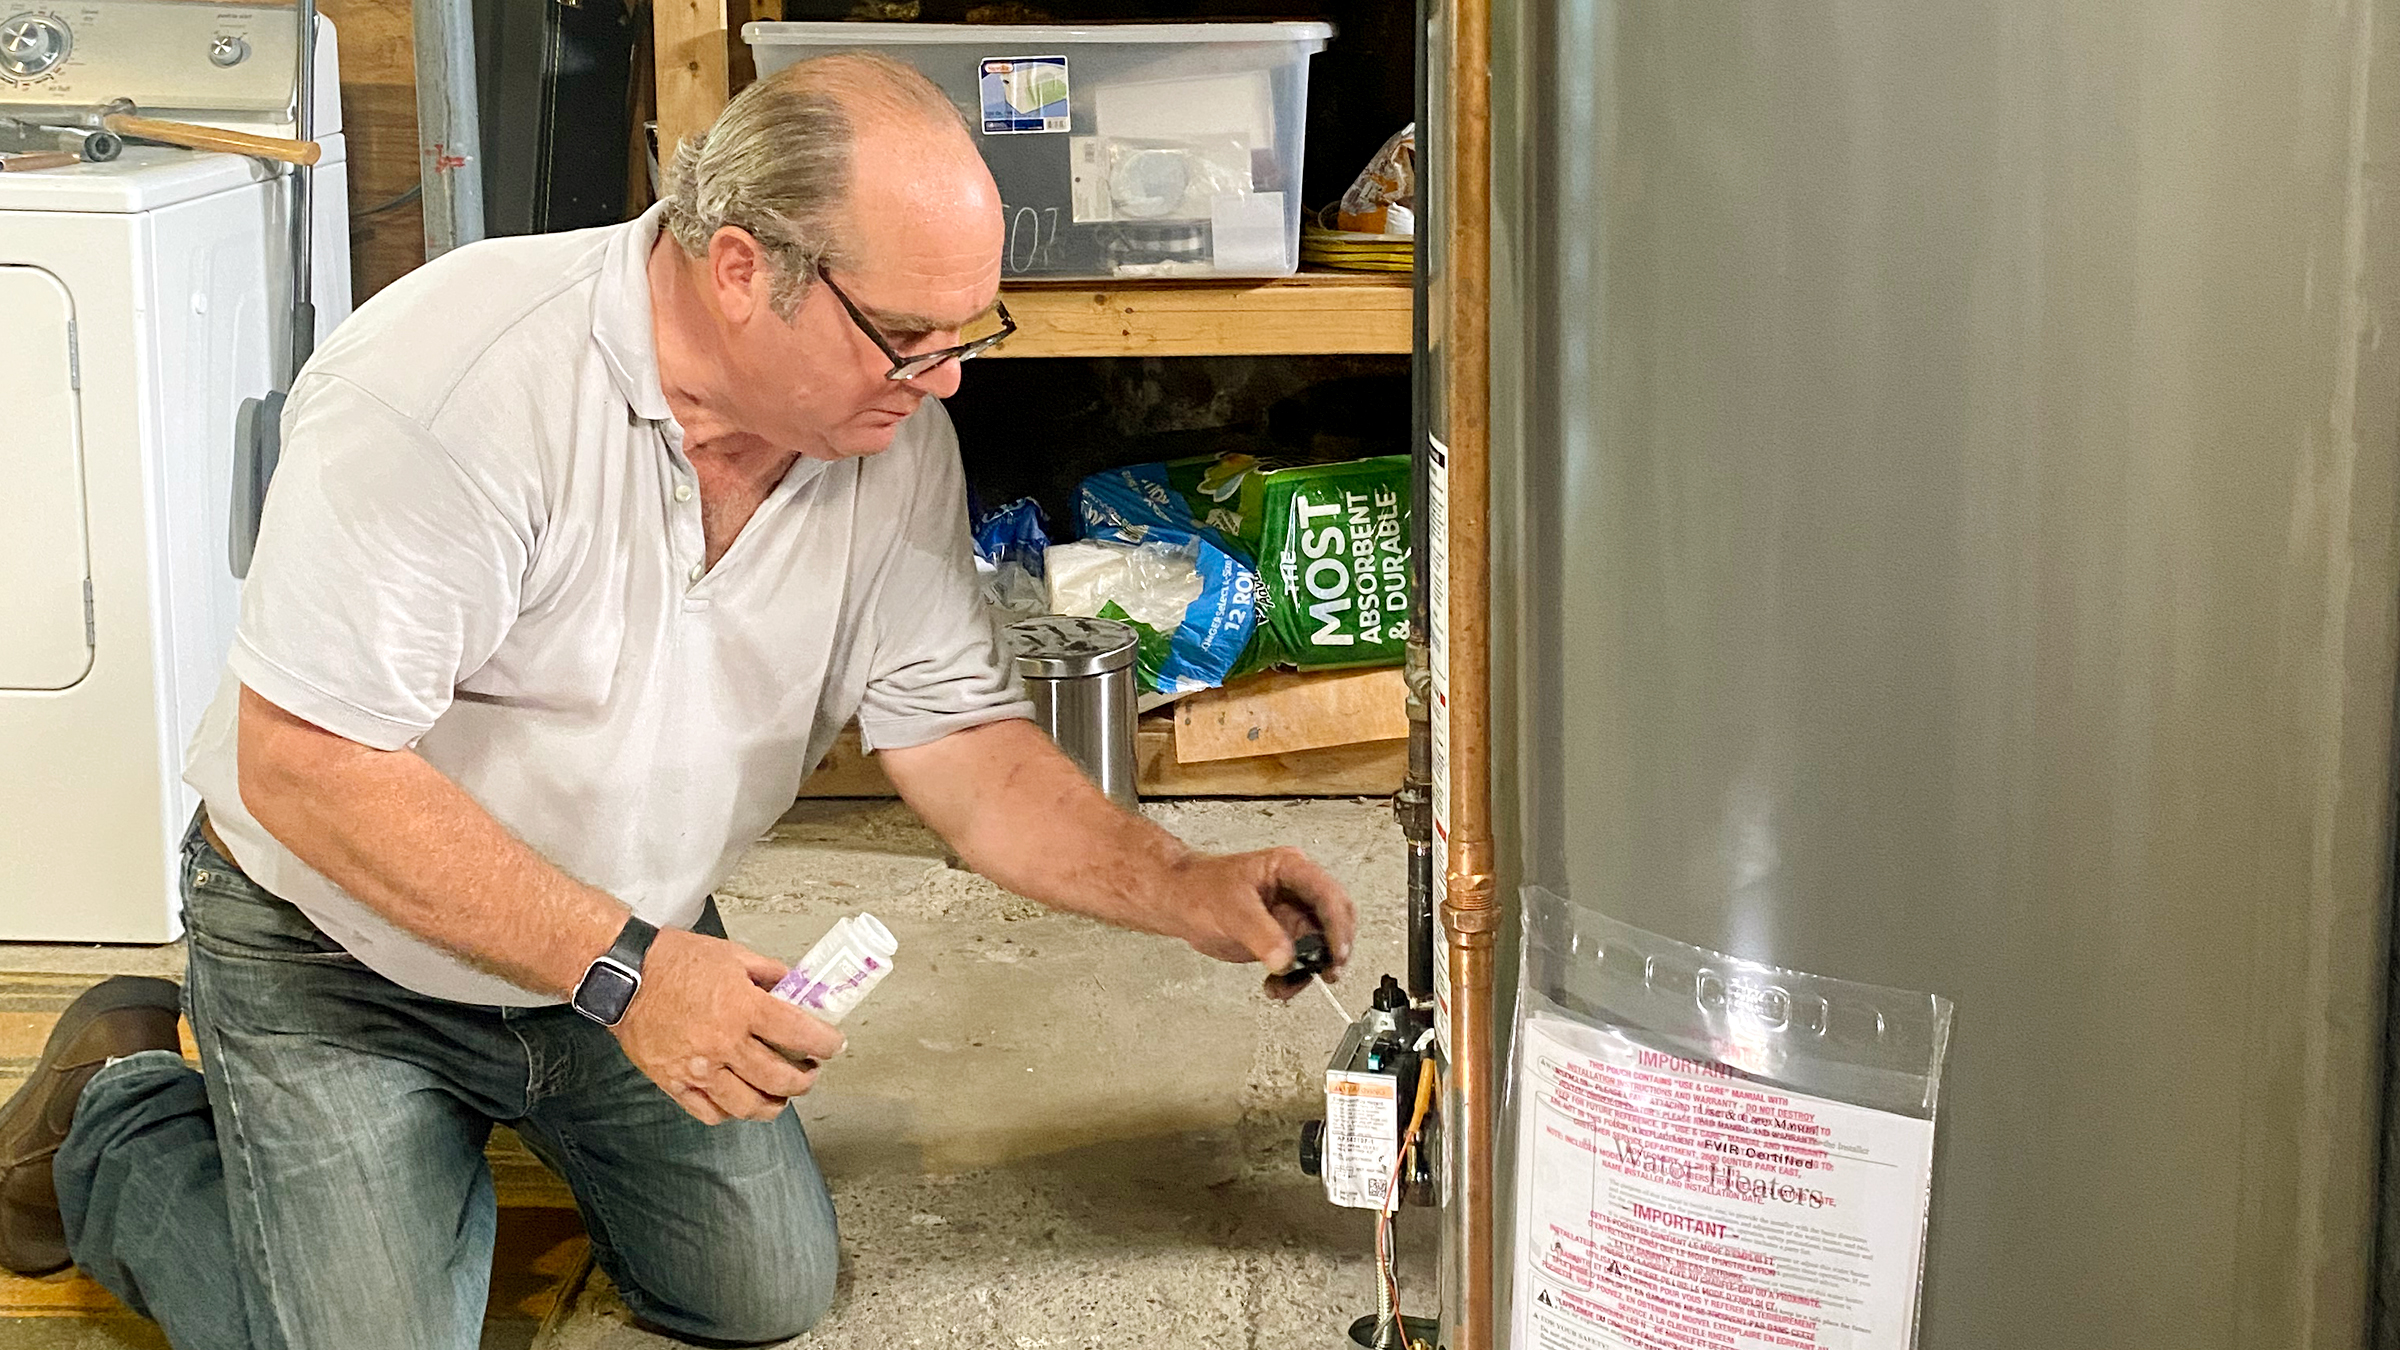 S21 E7, Richard Trethewey replaces a tank-type water heater